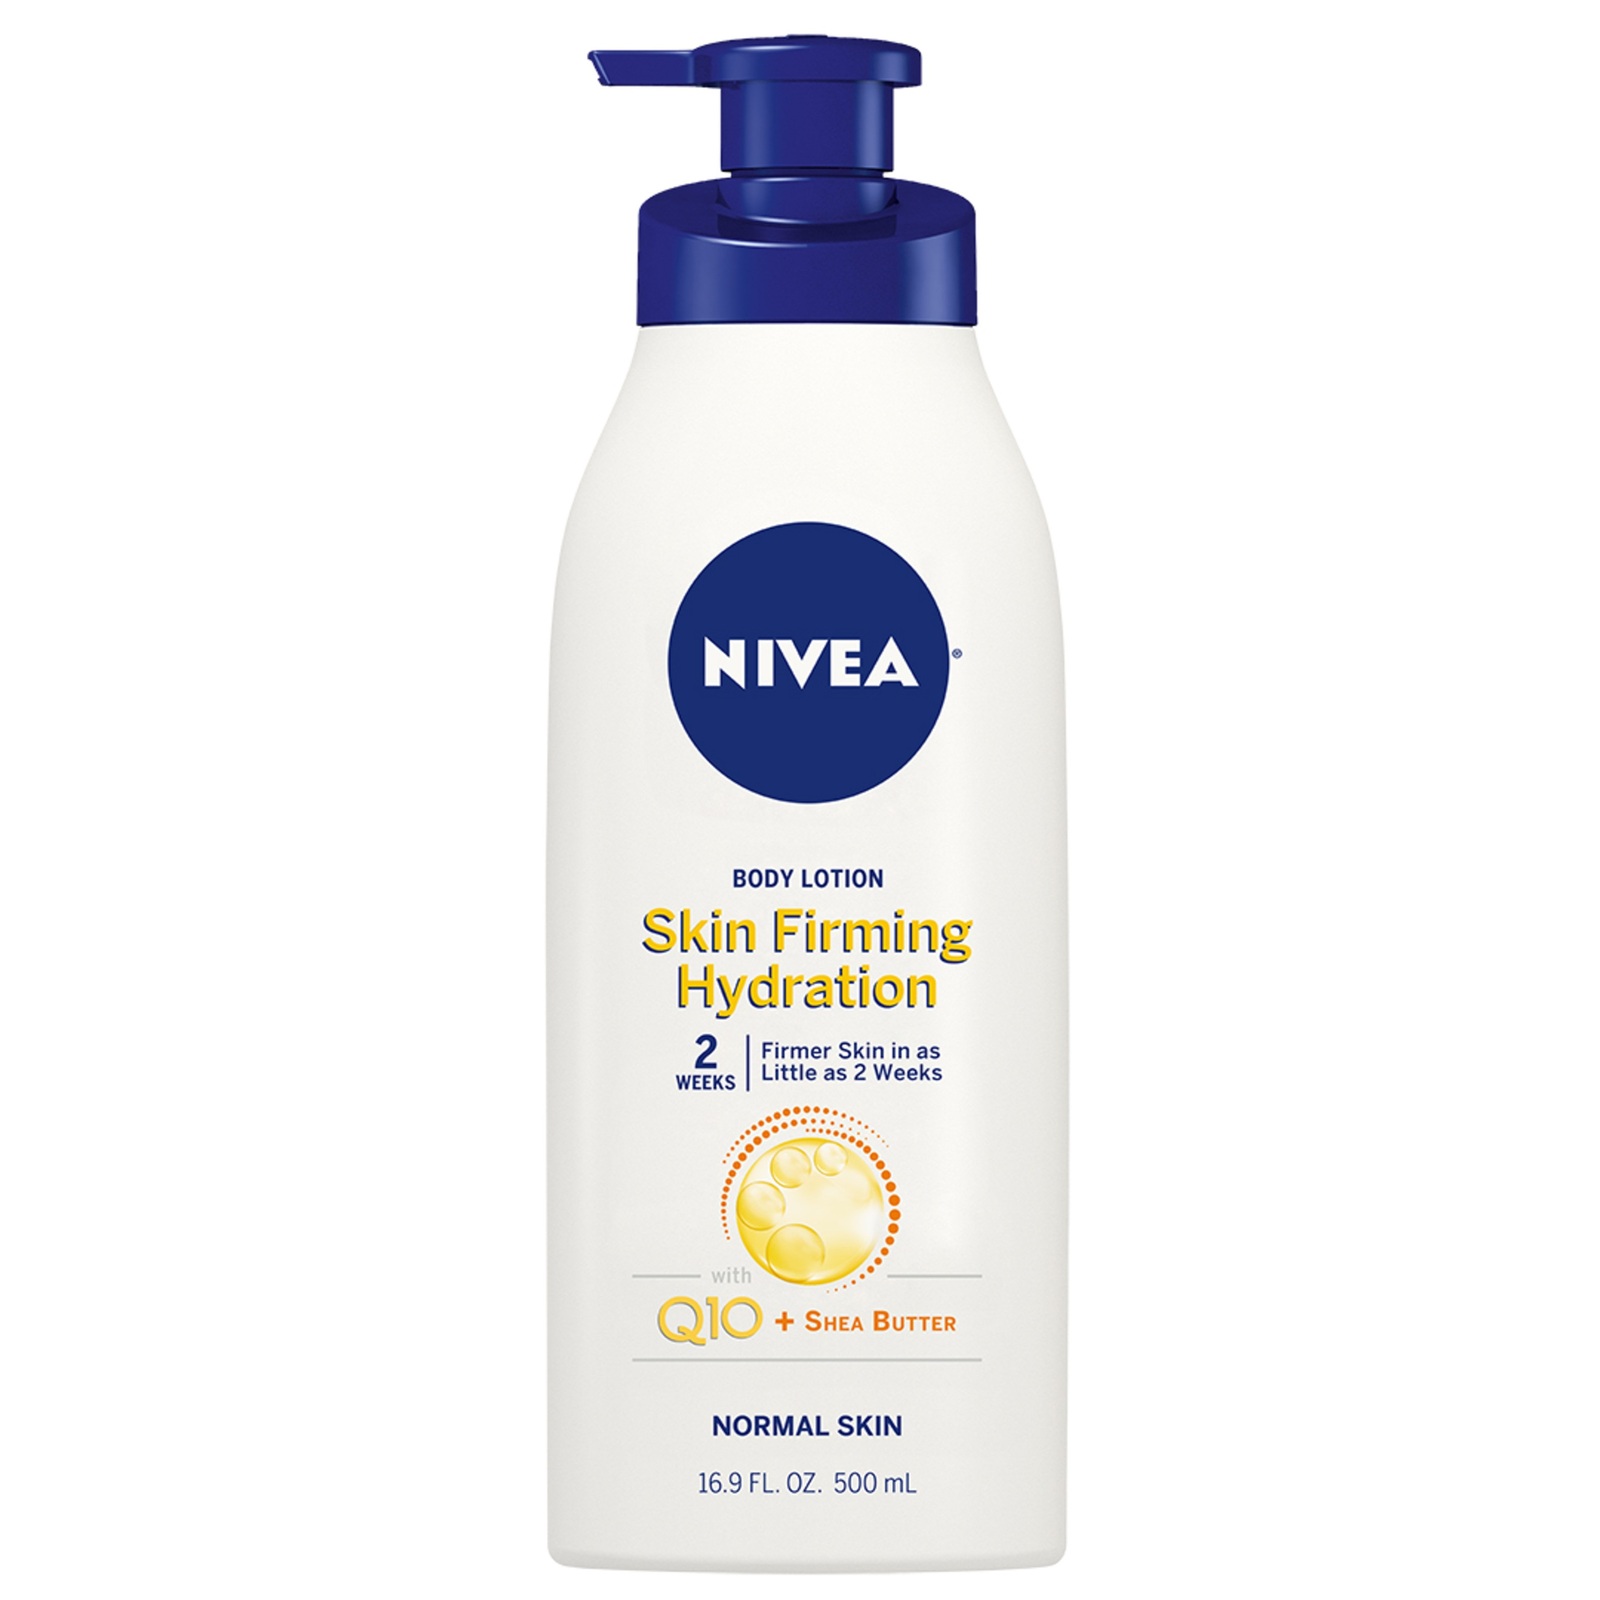 NIVEA Skin Firming Hydration Body Lotion Q10 & Shea Butter Bottle - 16.9 fl. Oz.